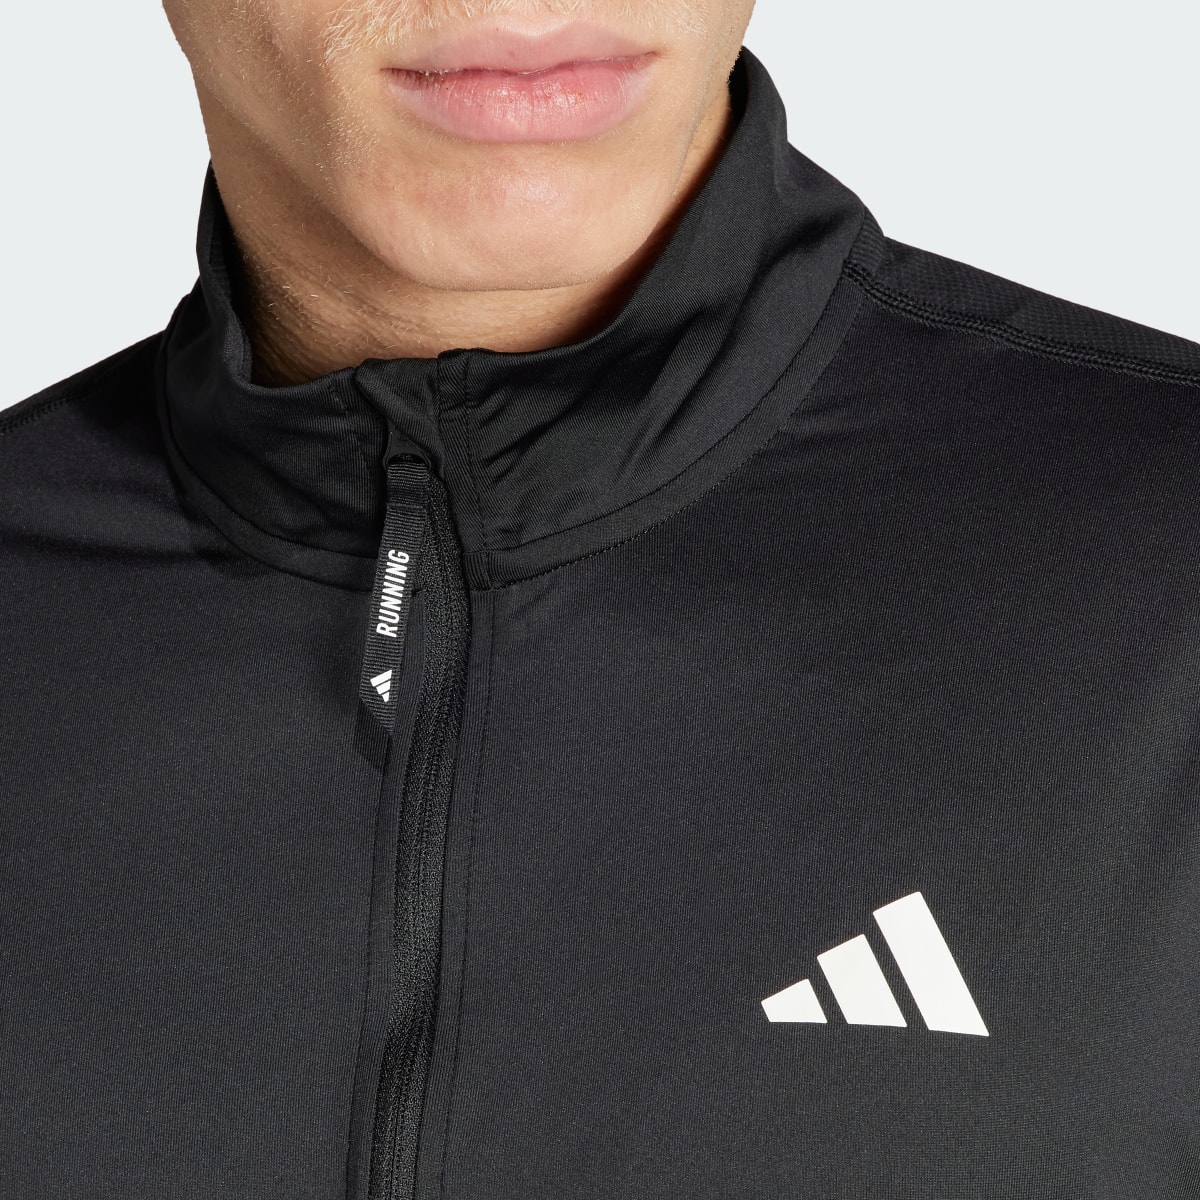 Adidas Own the Run Half-Zip Jacket. 6